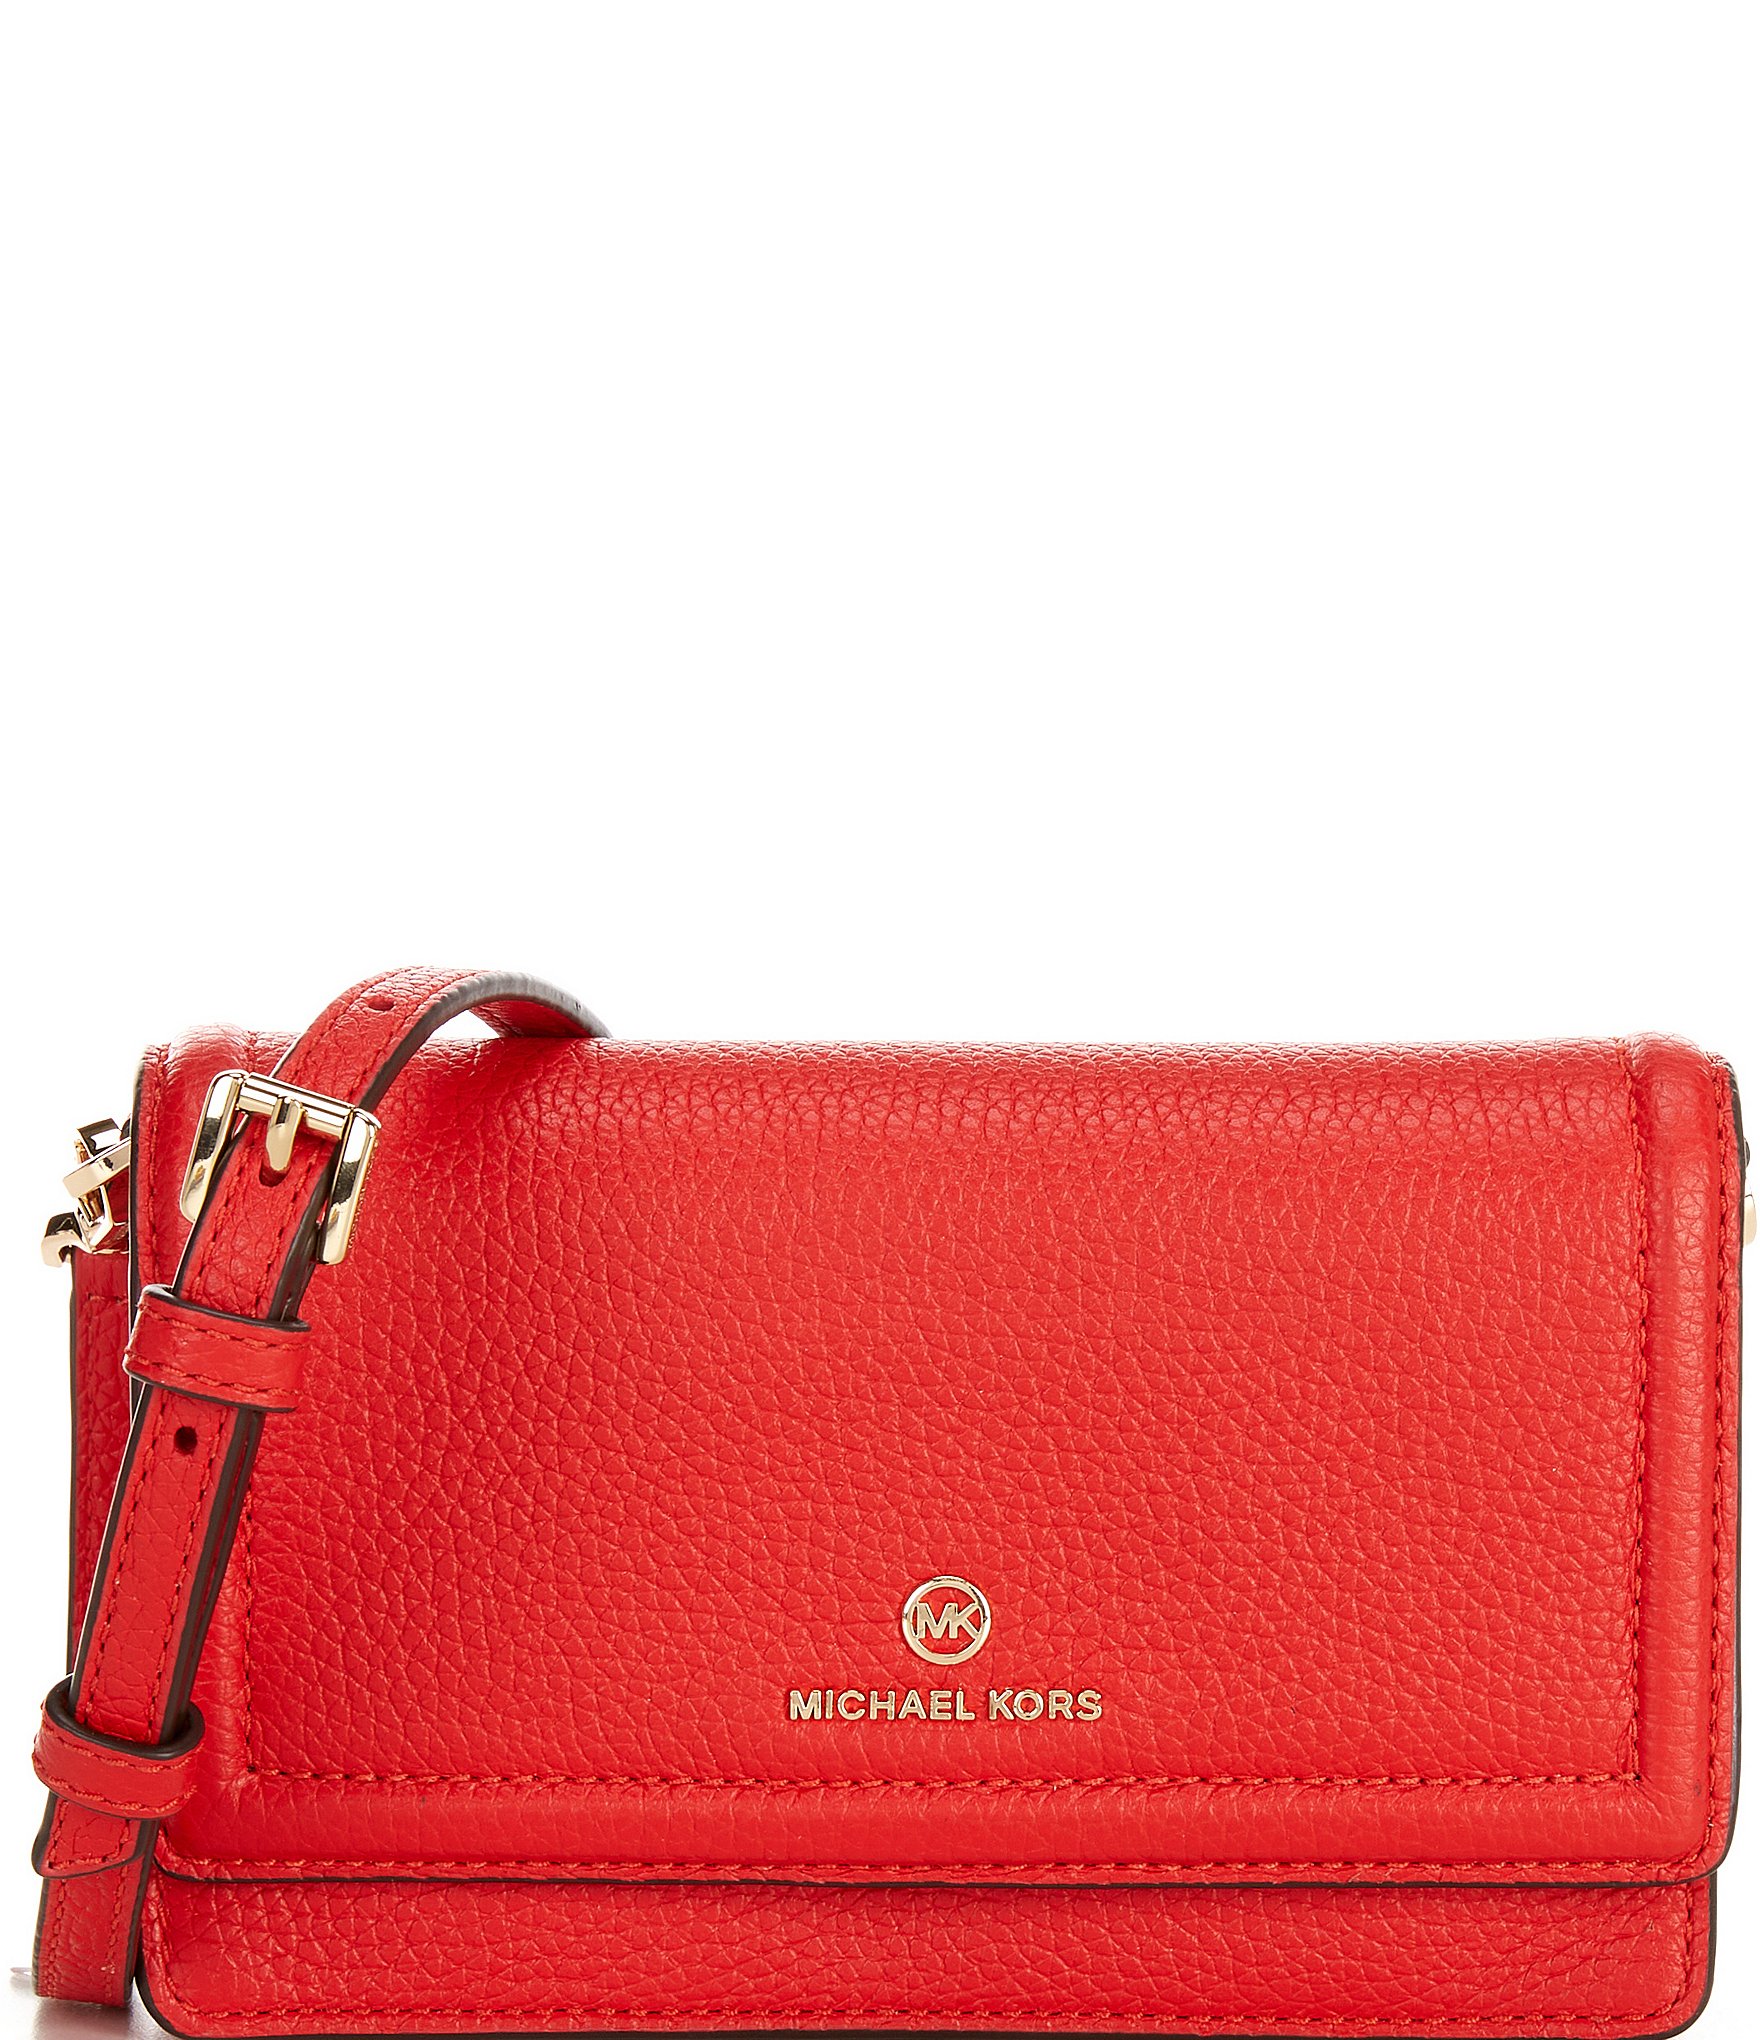 Sale & Clearance White Handbags, Purses & Wallets | Dillard's